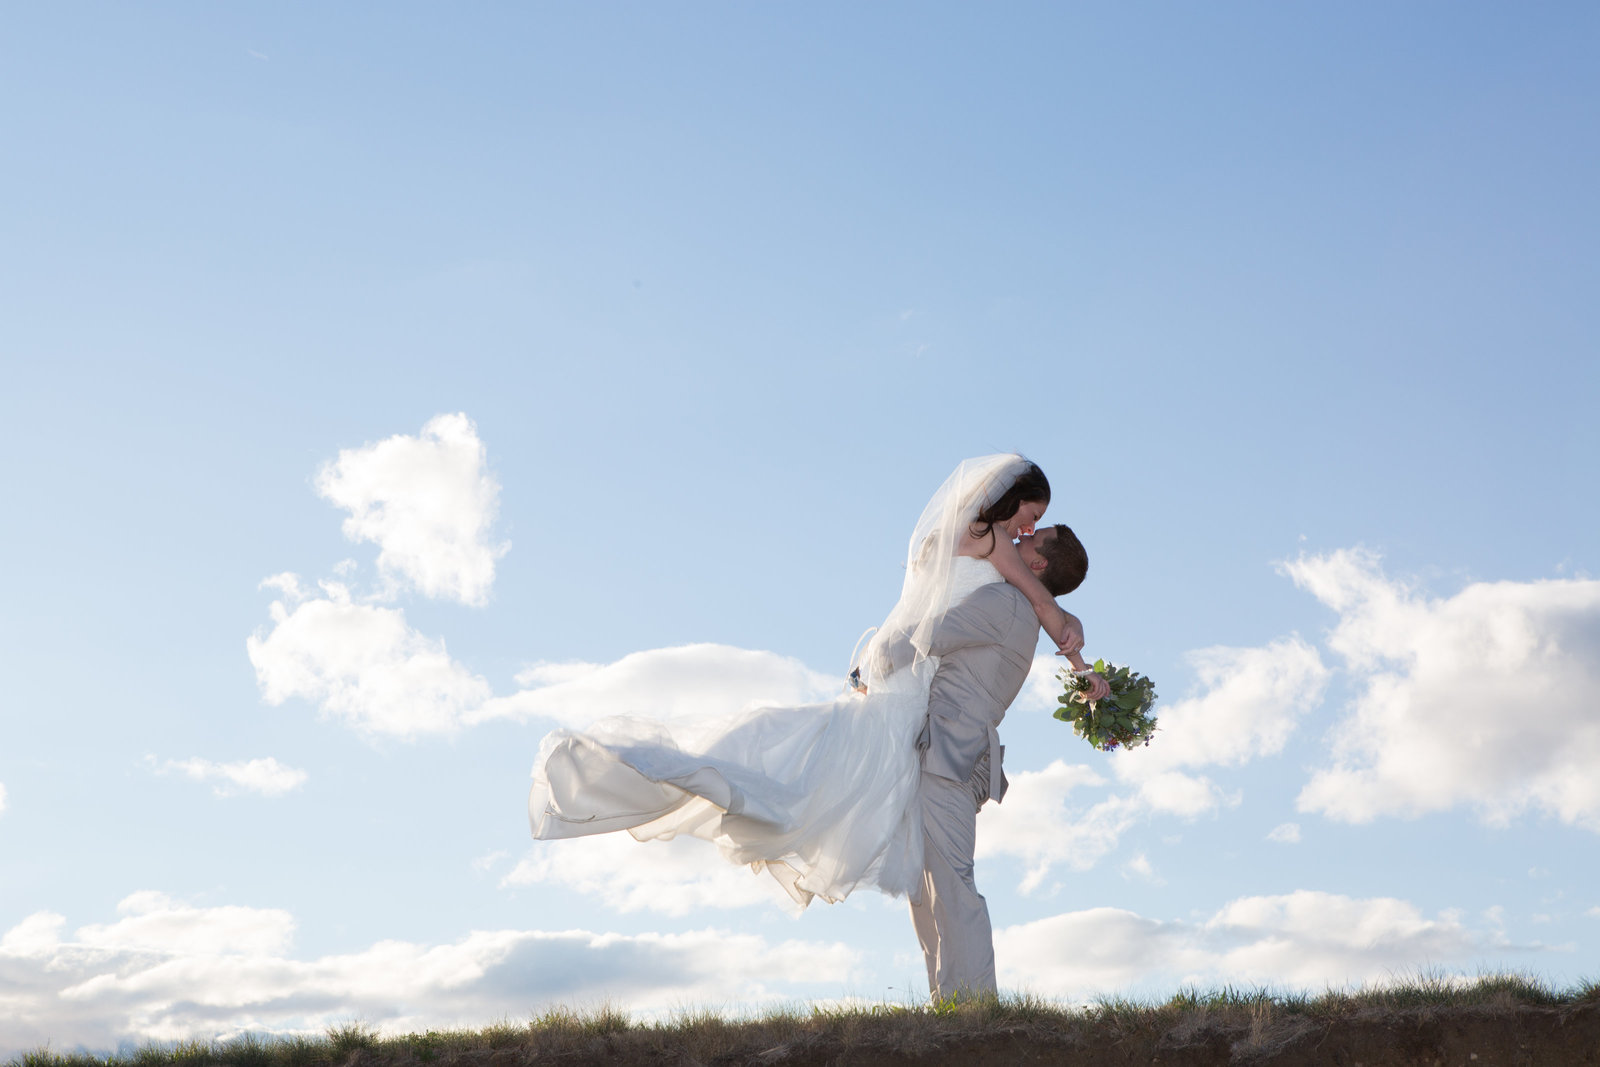 Groom lifting bride into air during wedding photo shoot